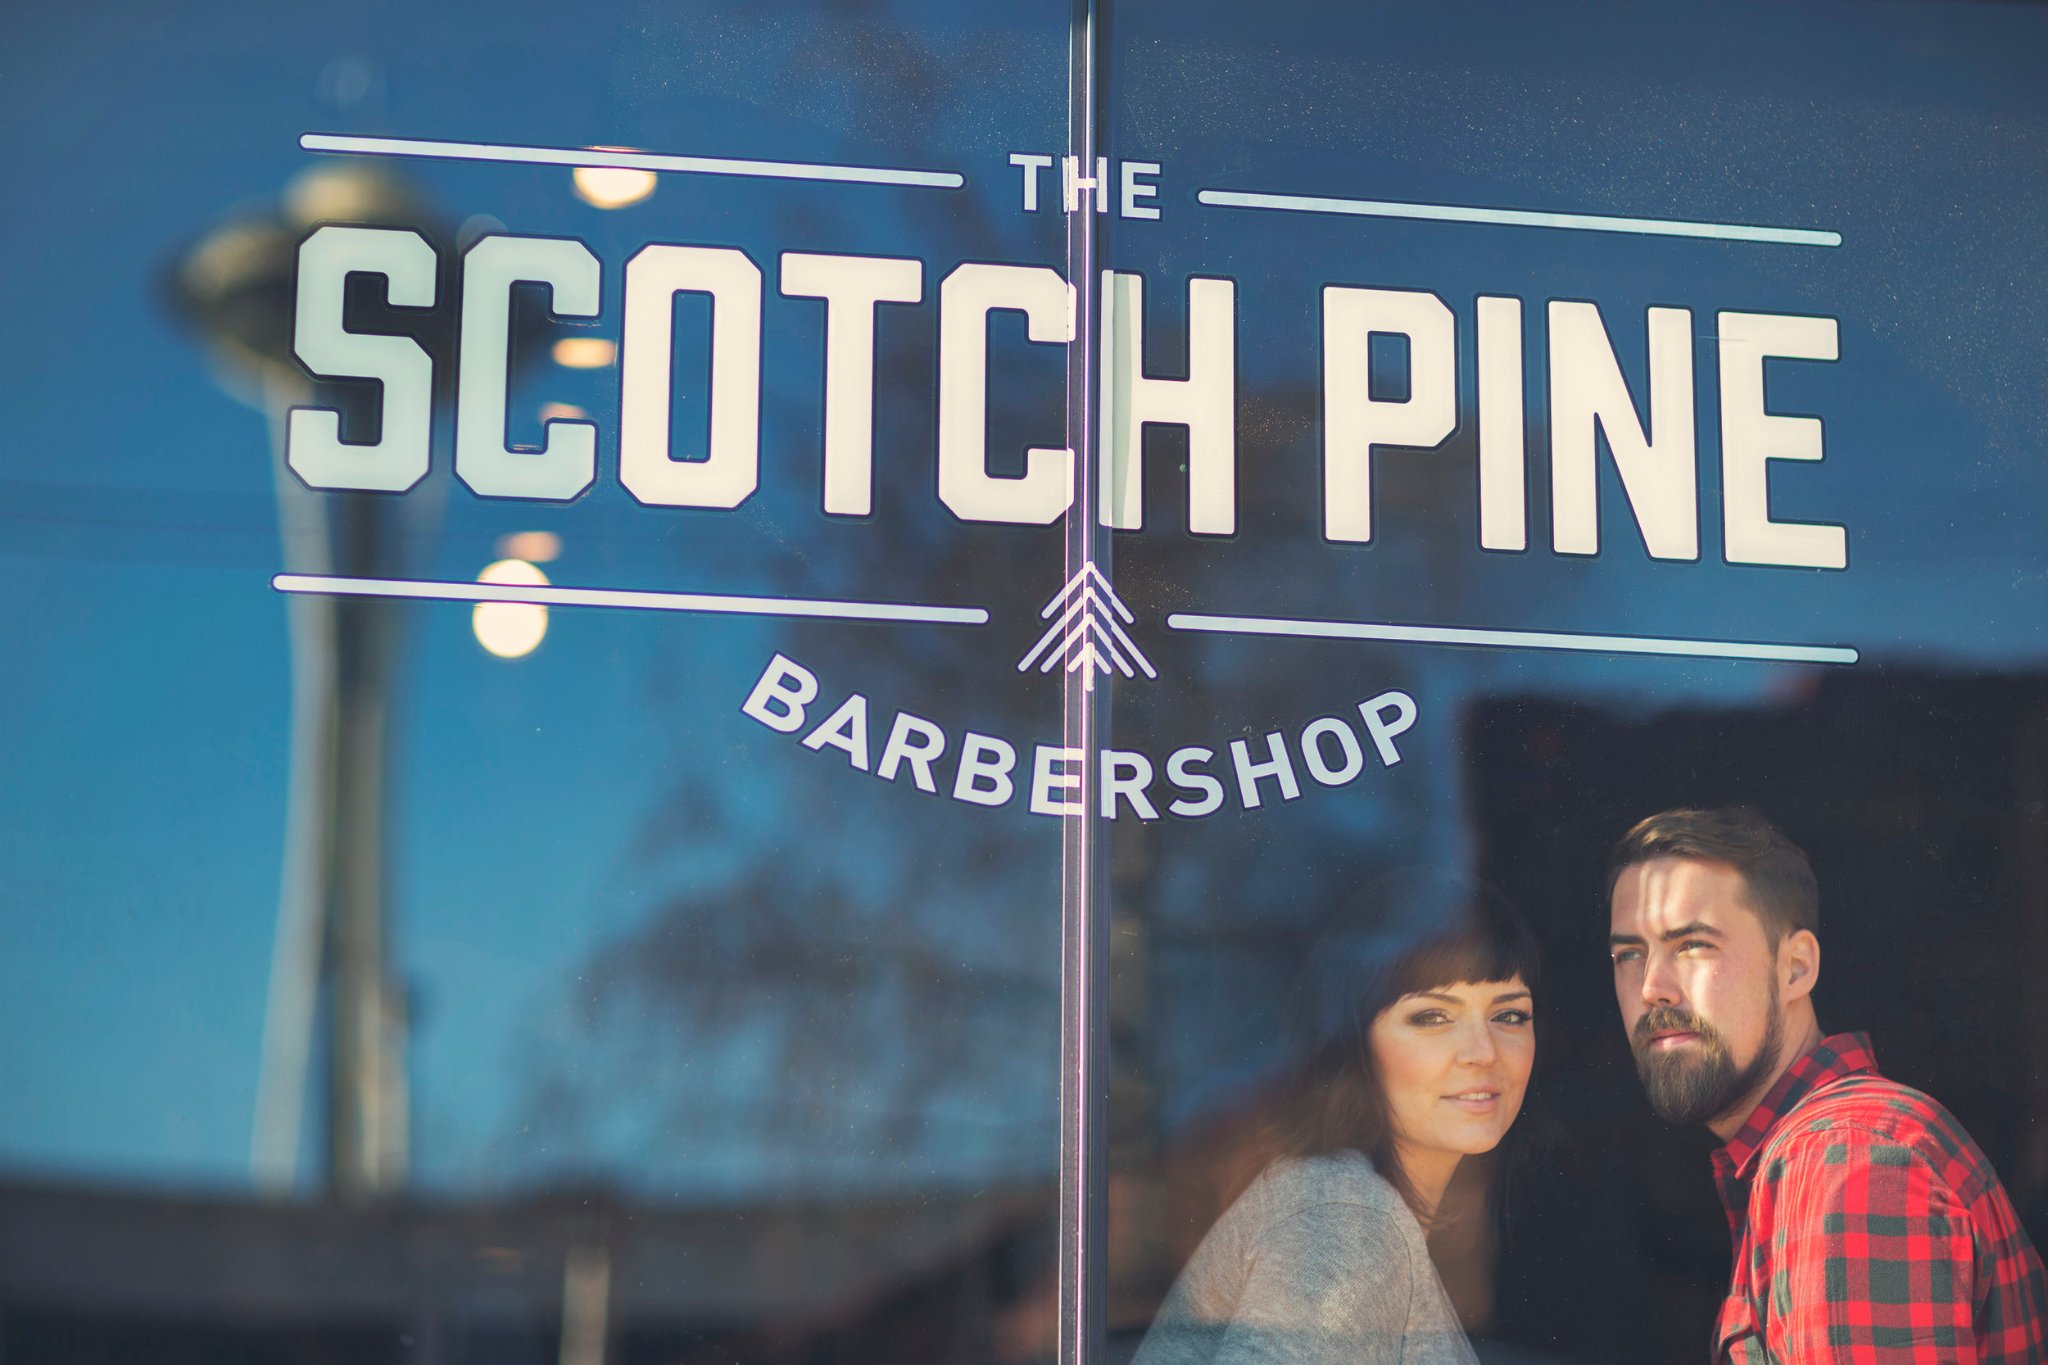 The Scotch Pine Barbershop